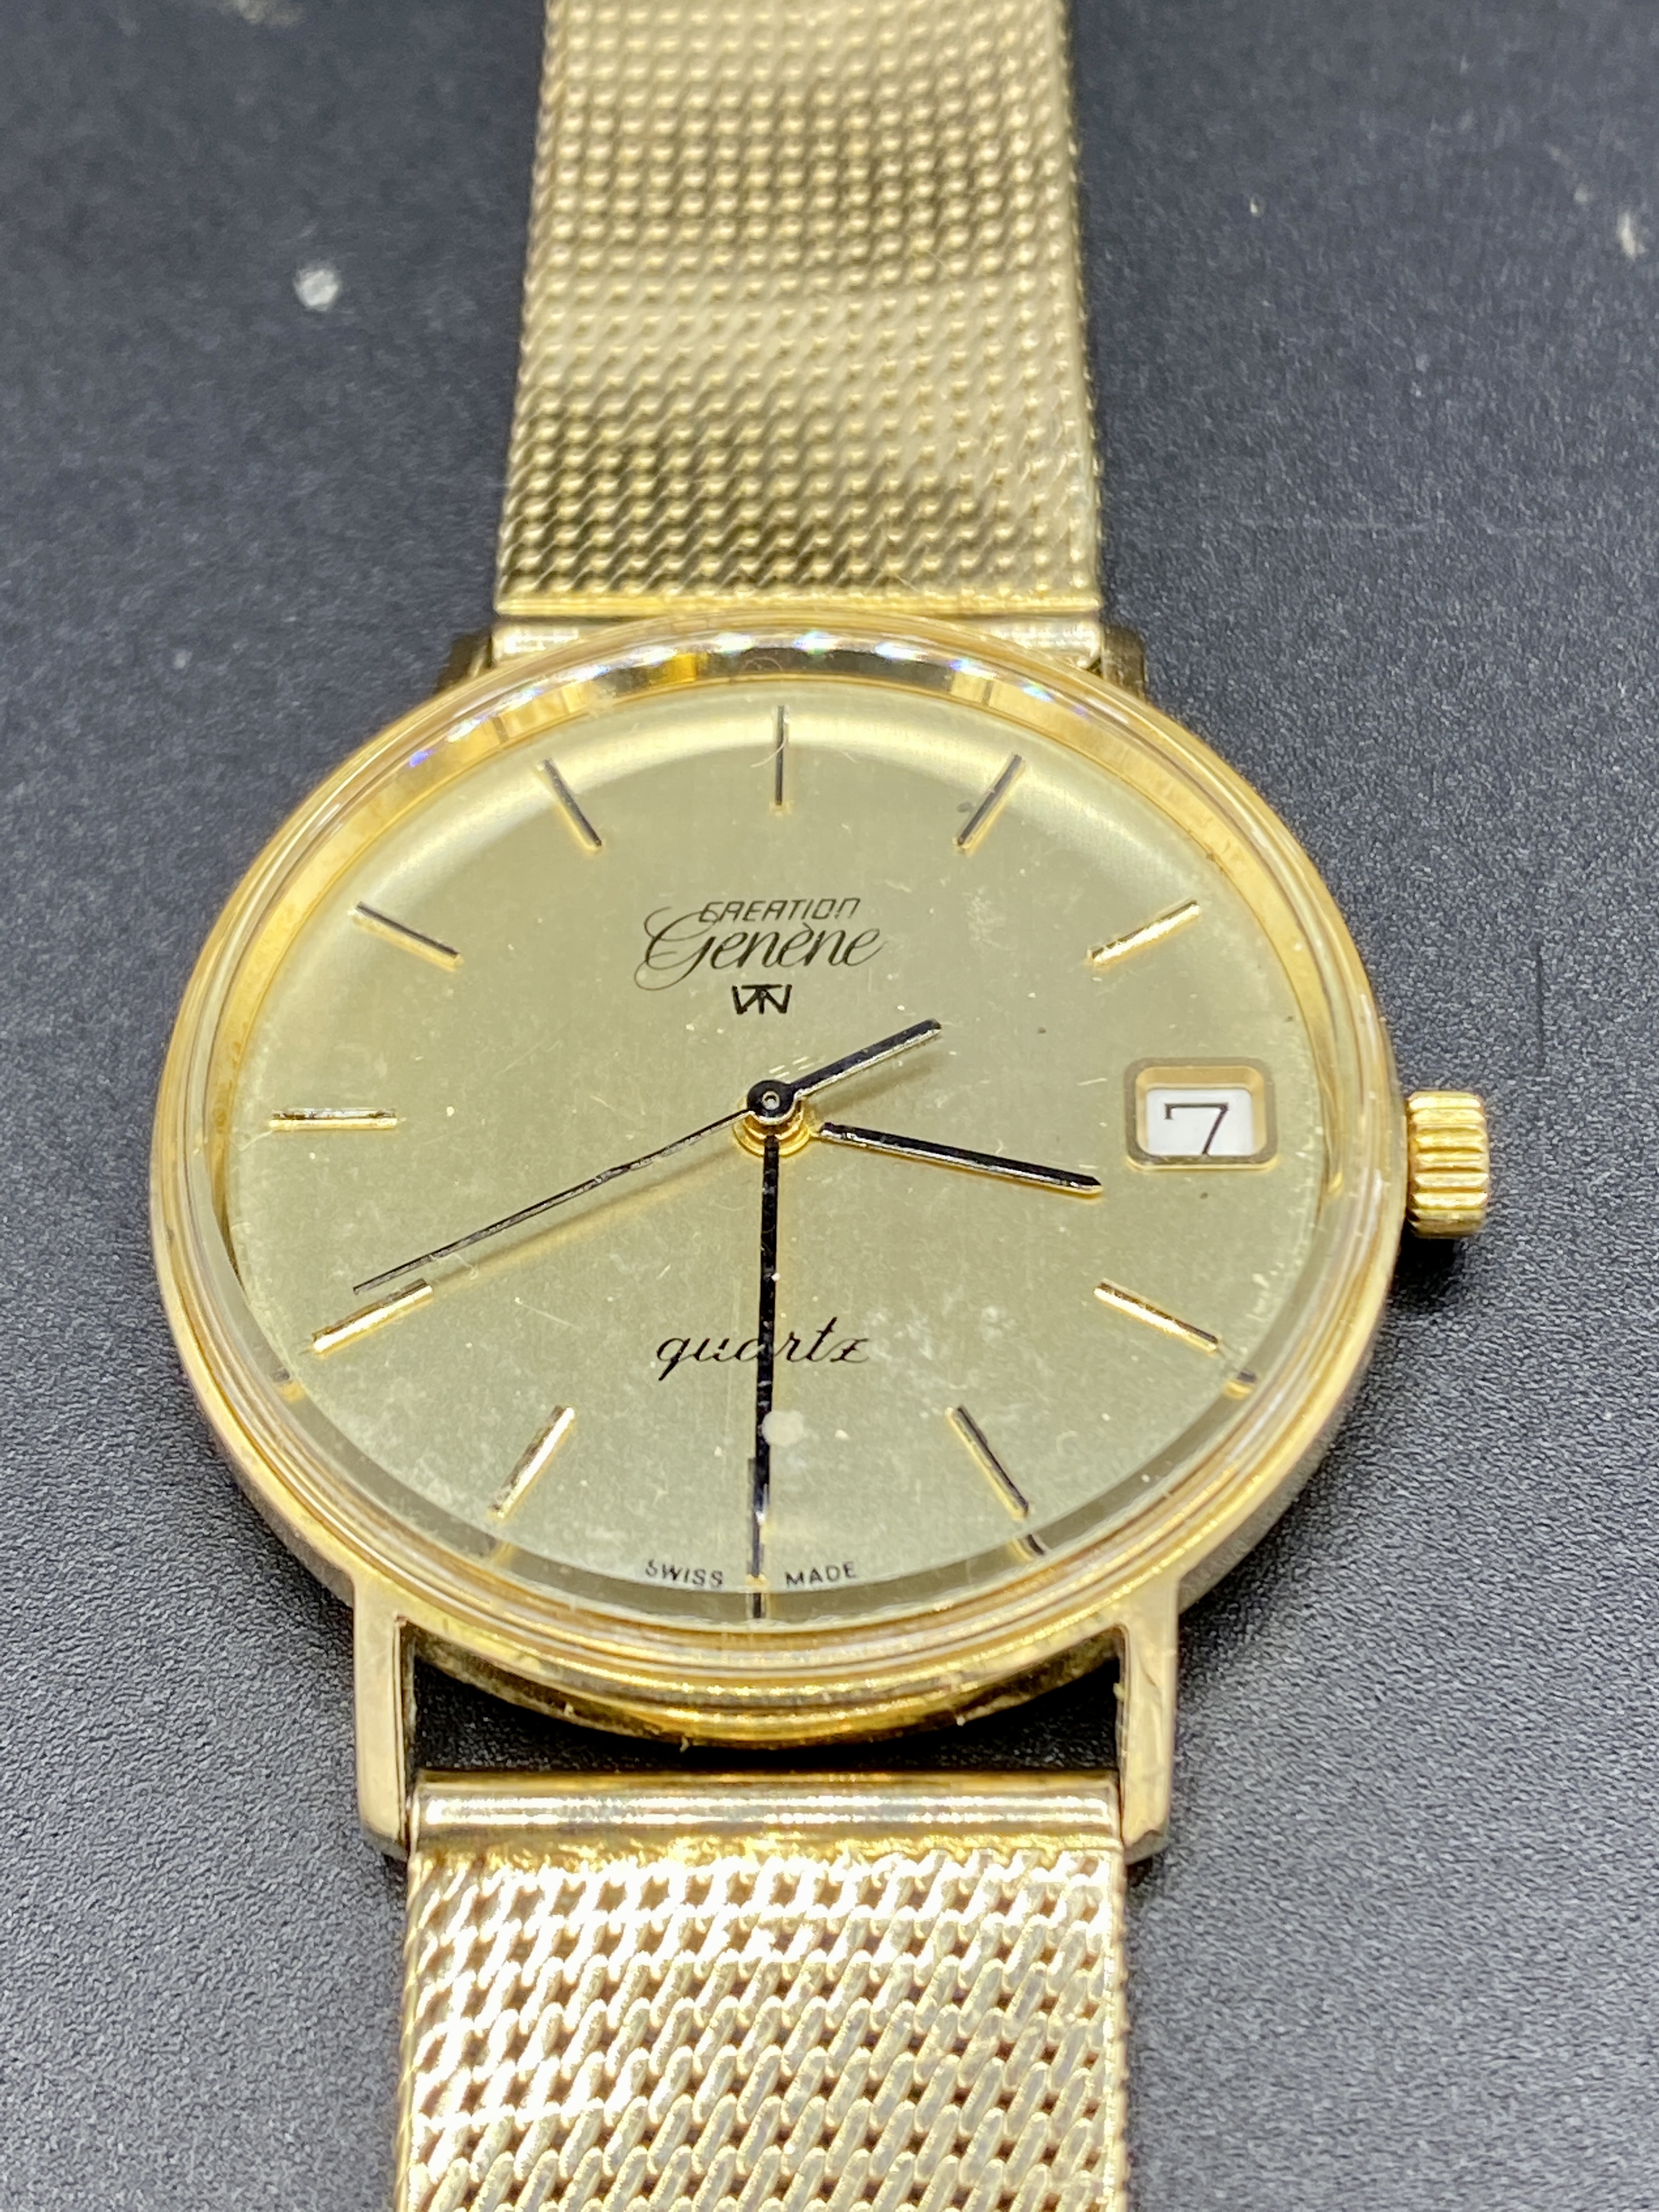 Creation Geneve 9ct gold case quartz wrist watch - Image 3 of 6